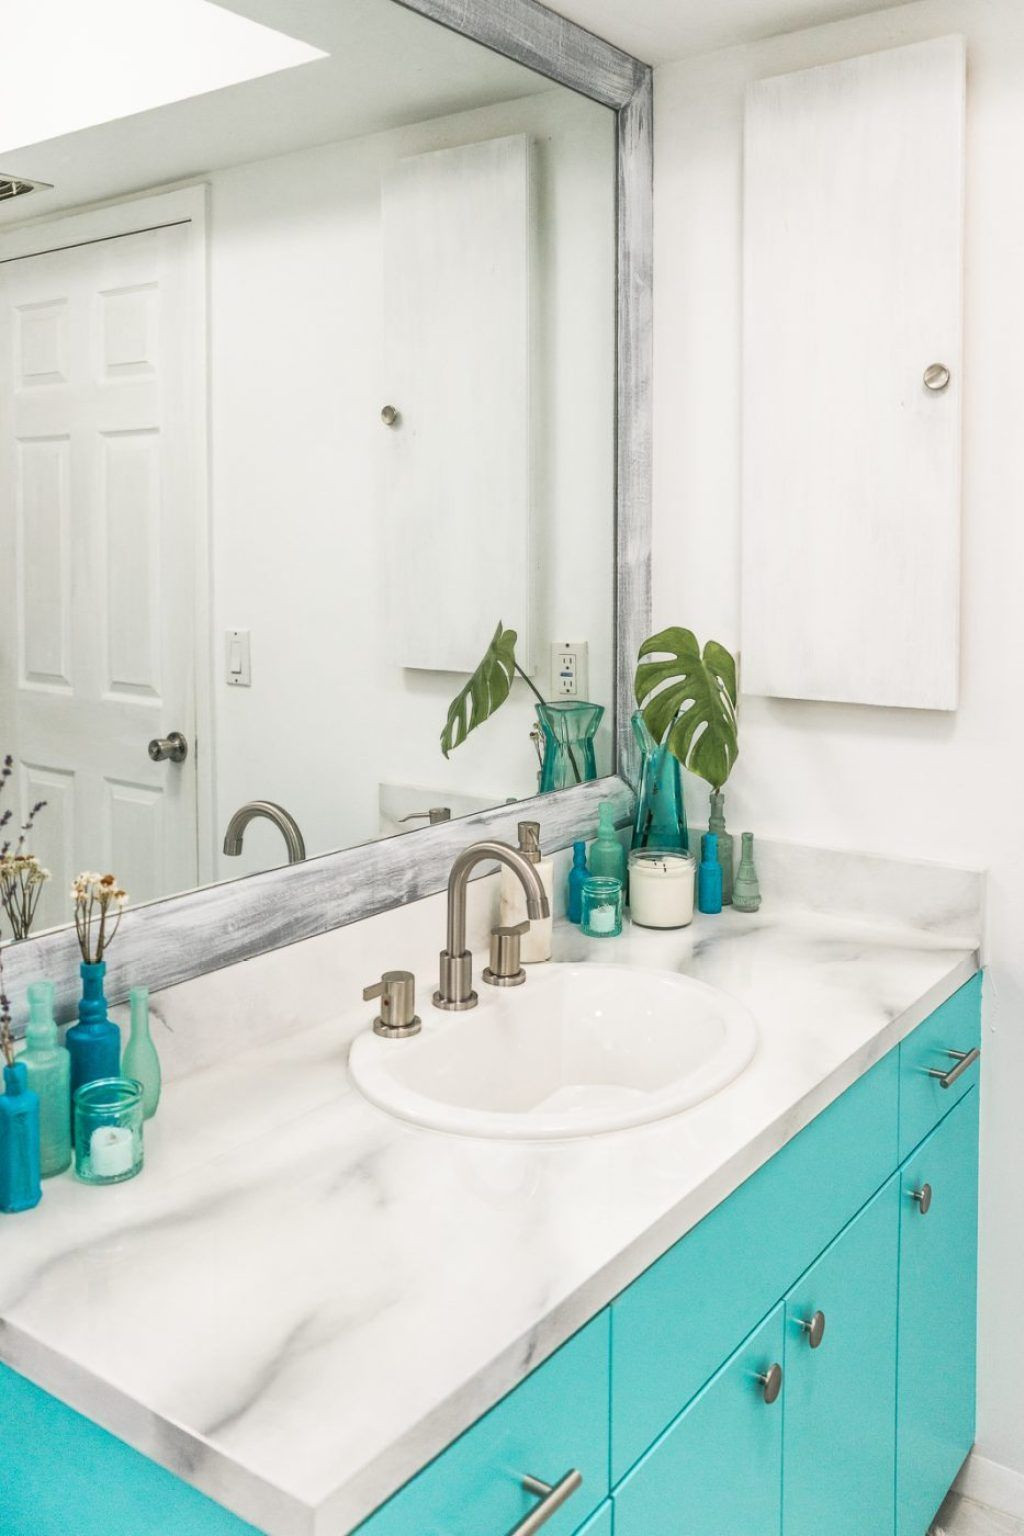 Bathroom Vanities Under $500
 DIY Bathroom Remodel Under $500